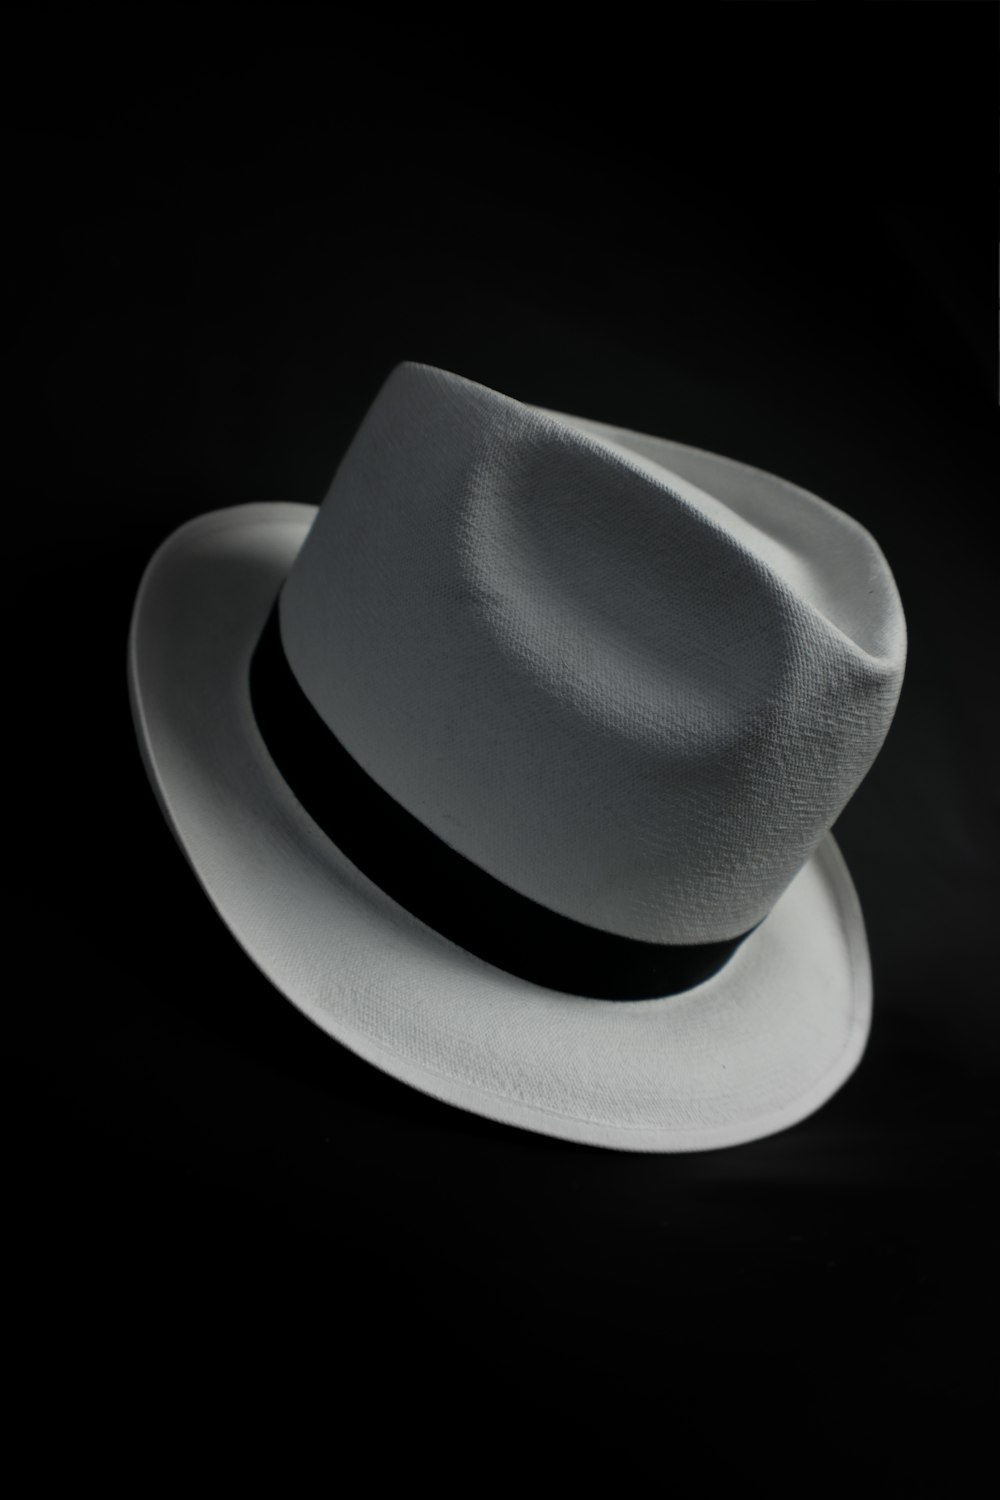 white cowboy hat on black background